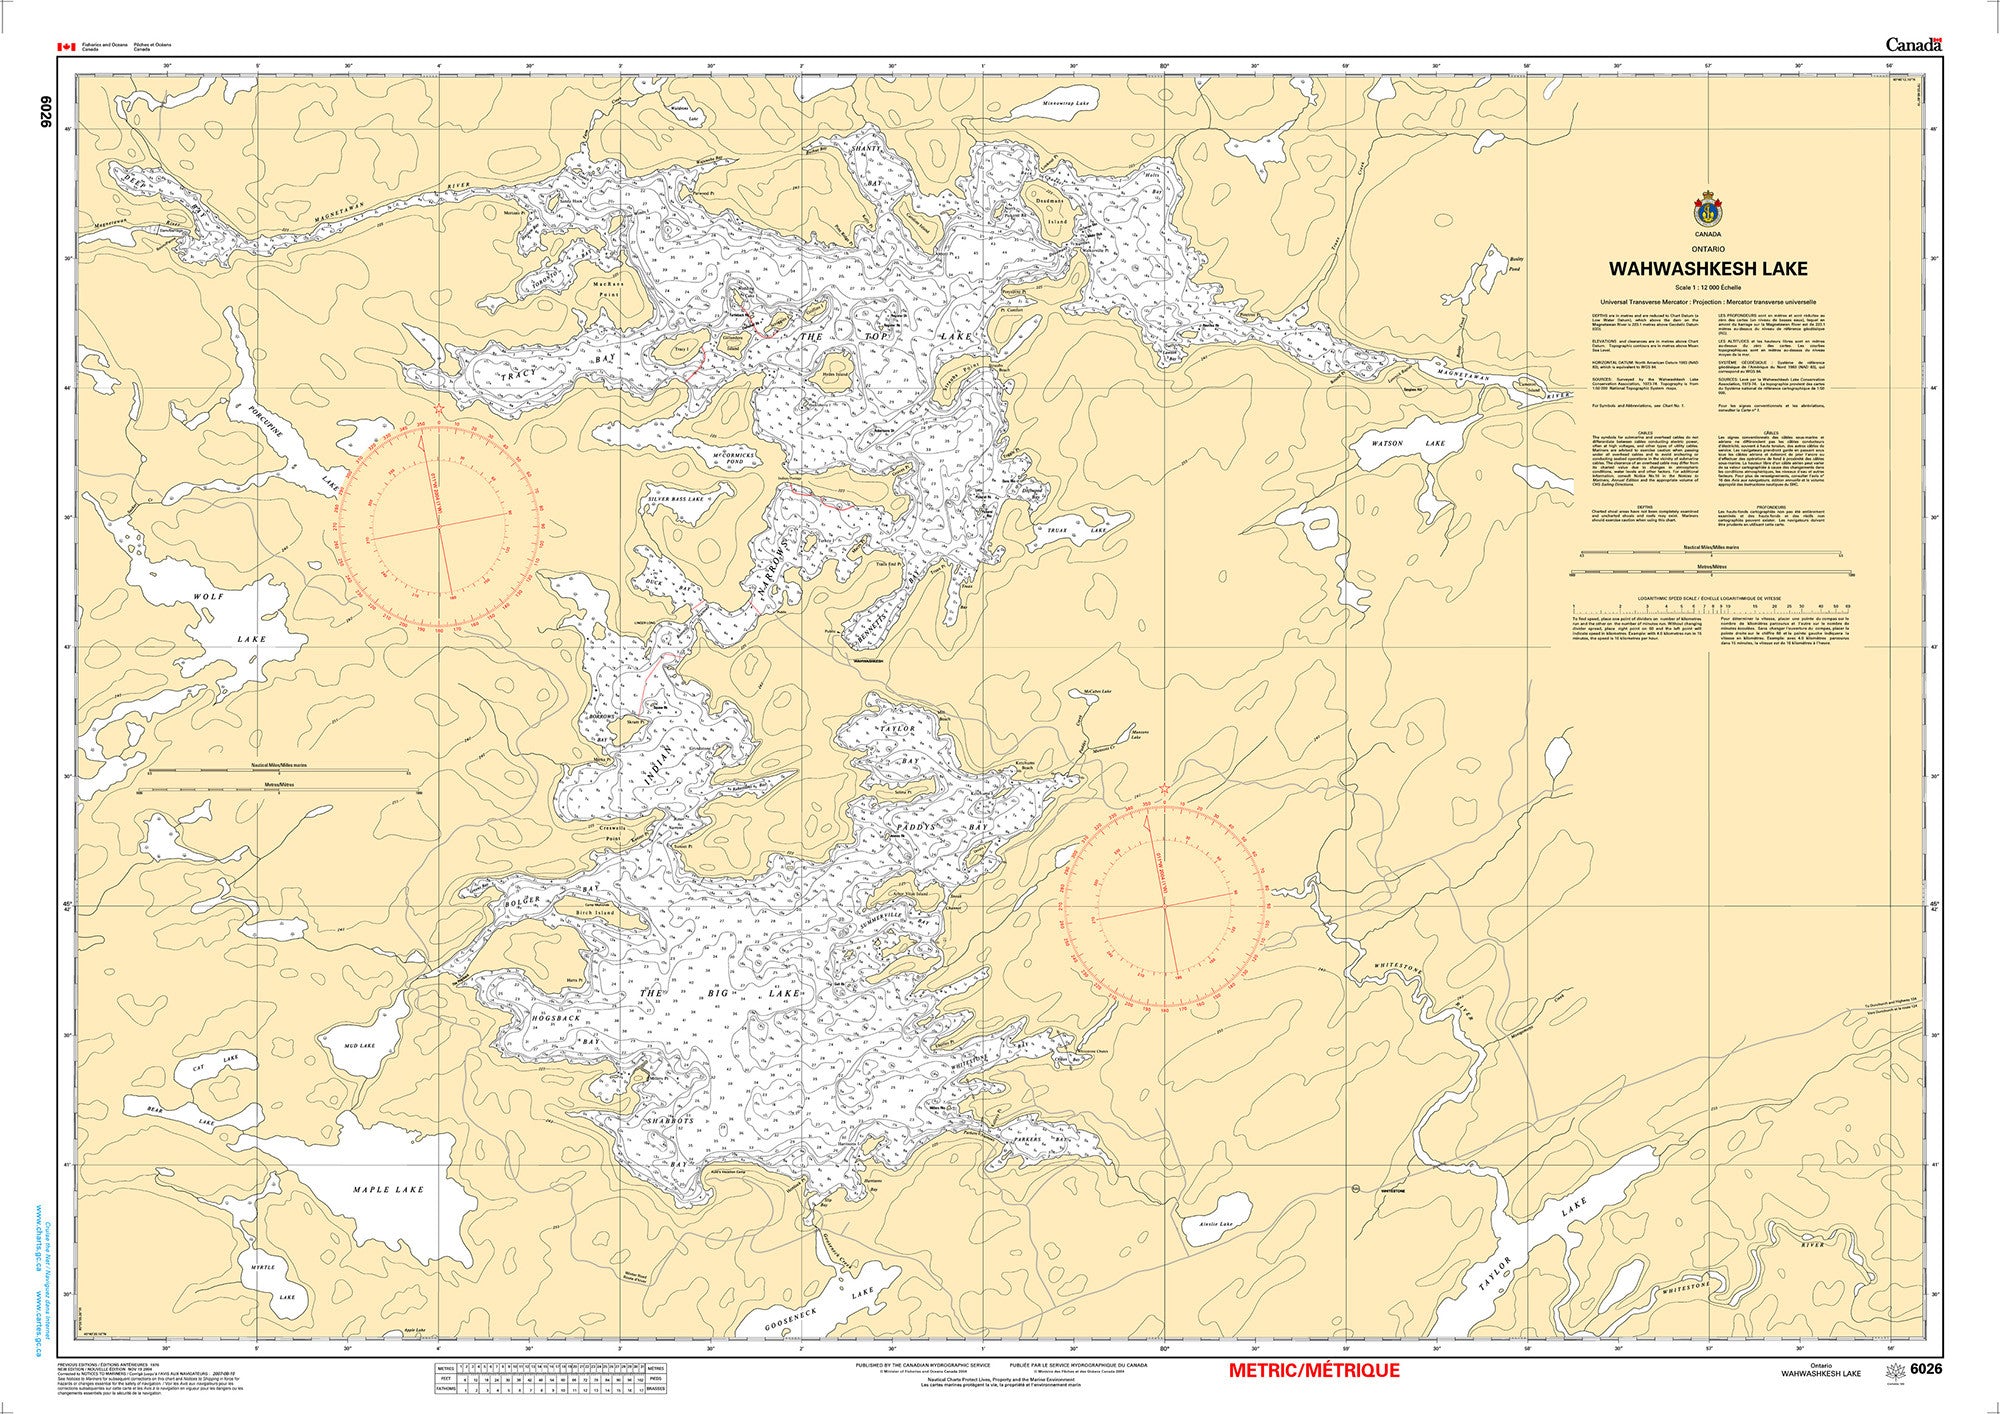 Canadian Hydrographic Service Nautical Chart CHS6026: Wahwashkesh Lake